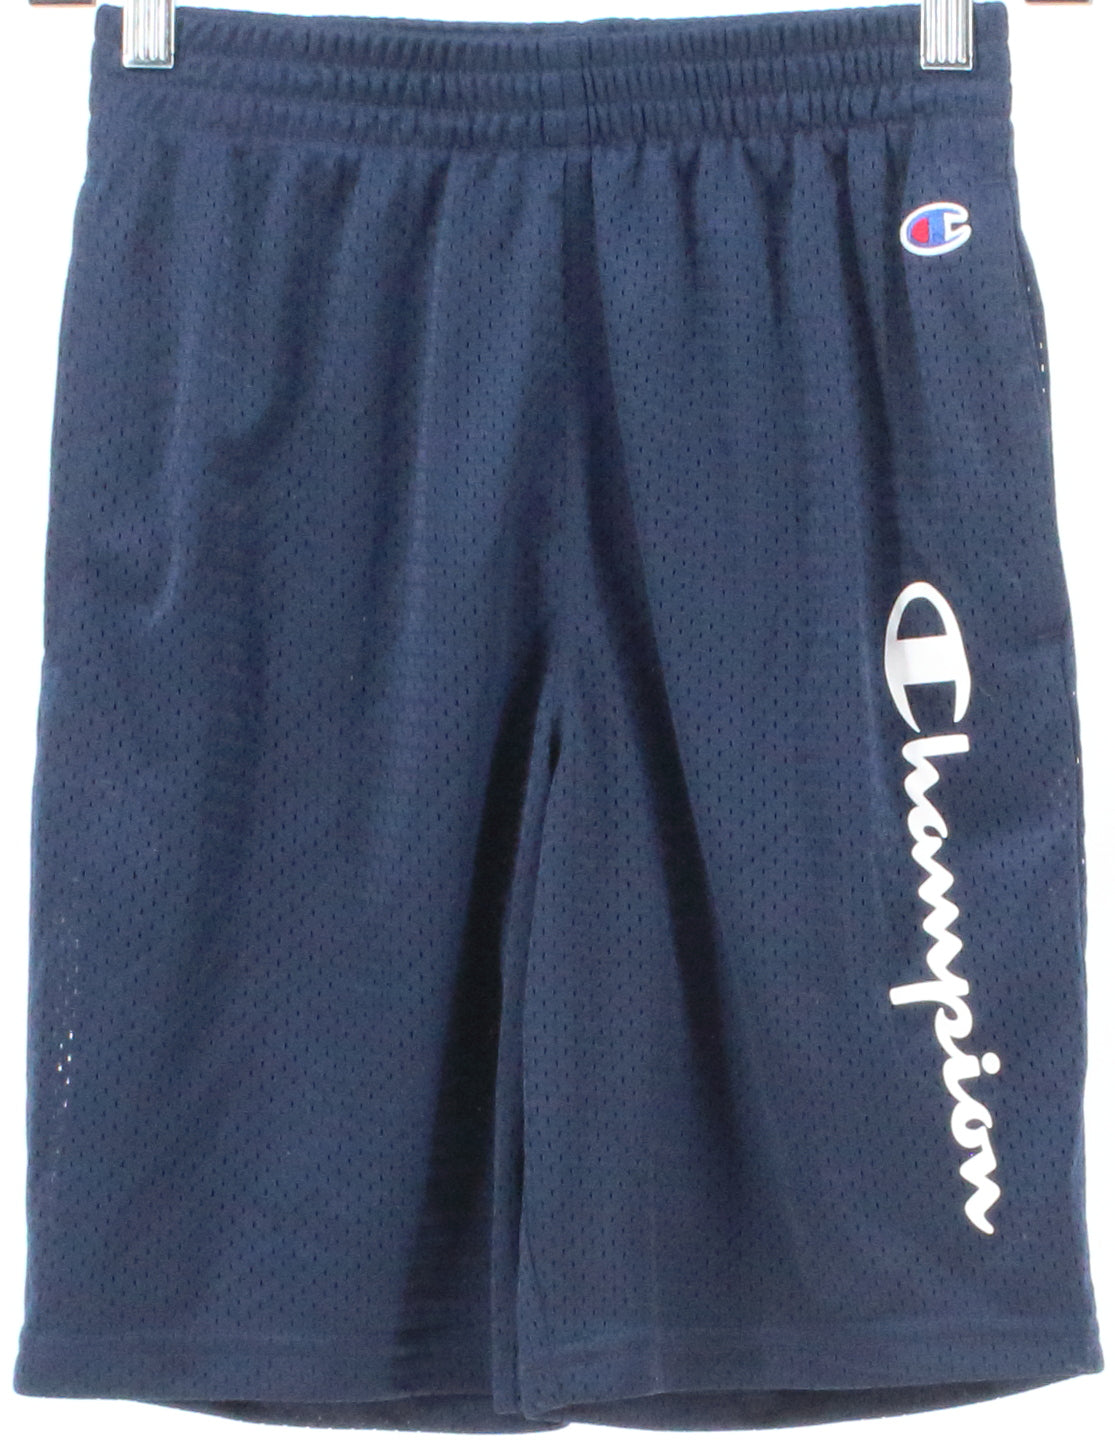 Champion Athleticwear Navy Blue Shorts